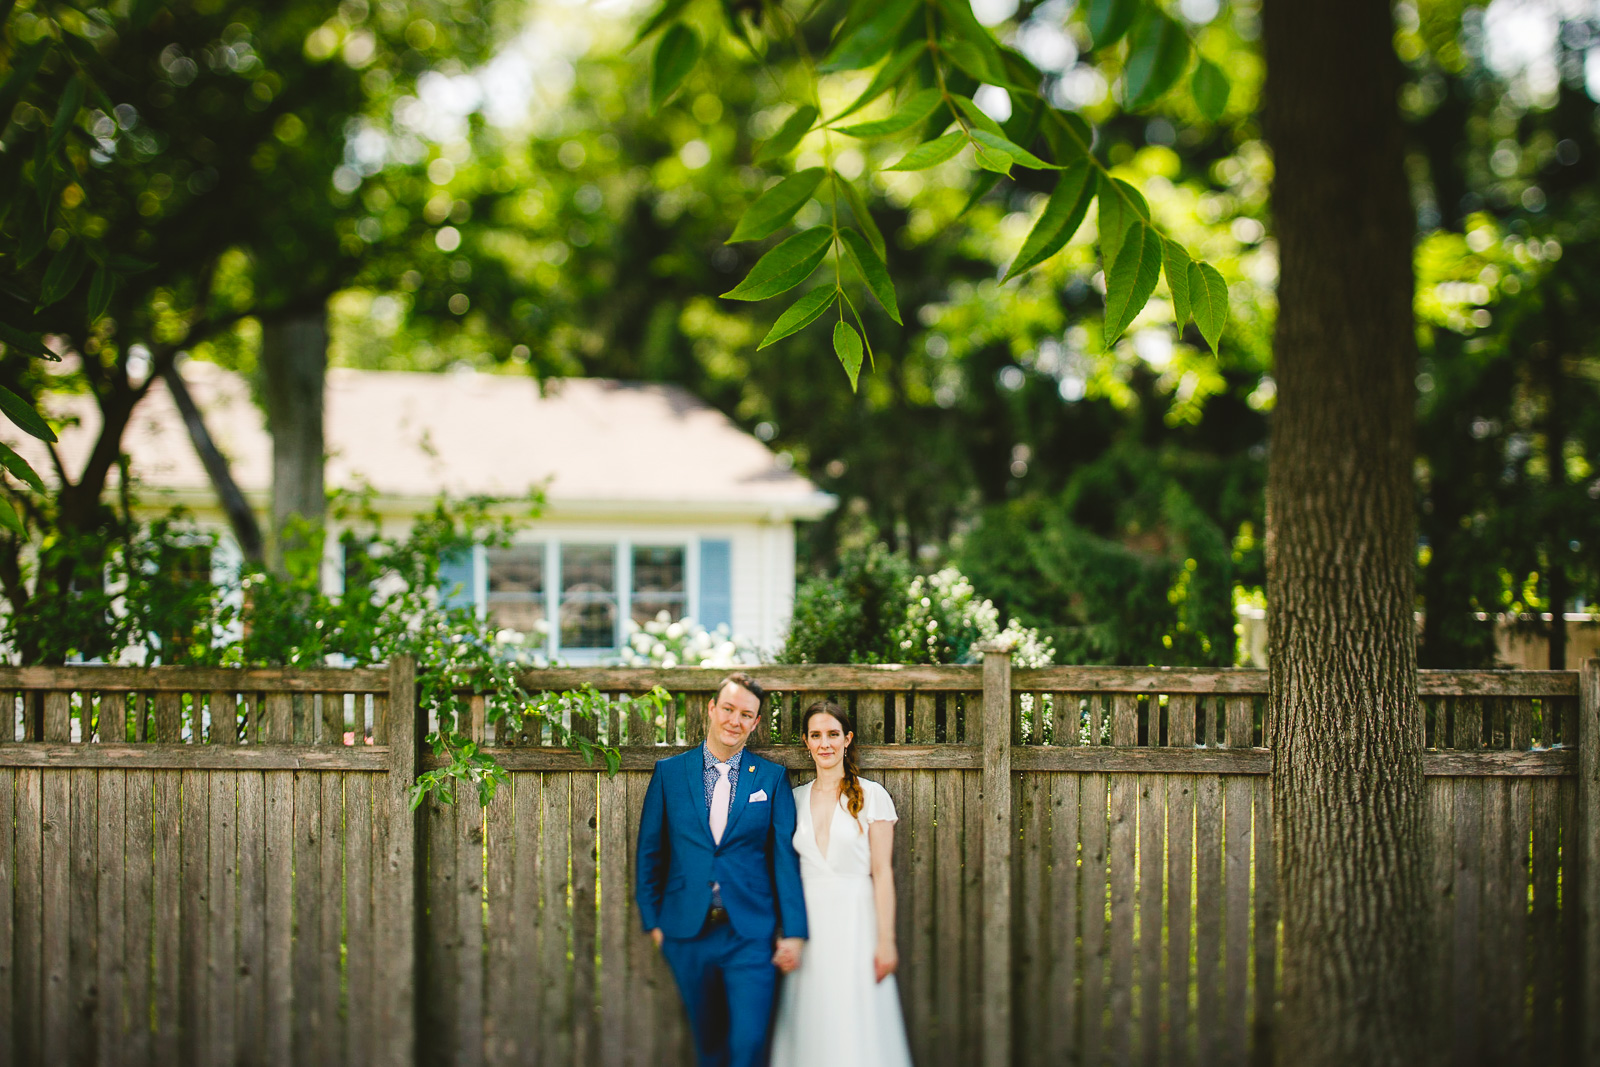 35 chicago wedding photos in backyard - Amazing Wedding in Backyard // Kristen + Jeff